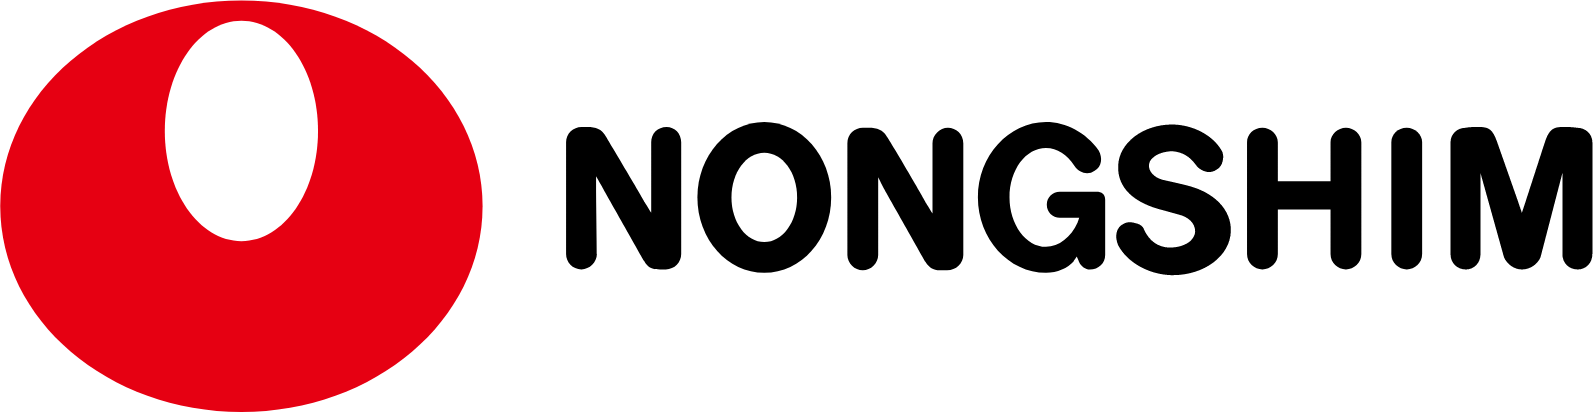 Nongshim logo large (transparent PNG)